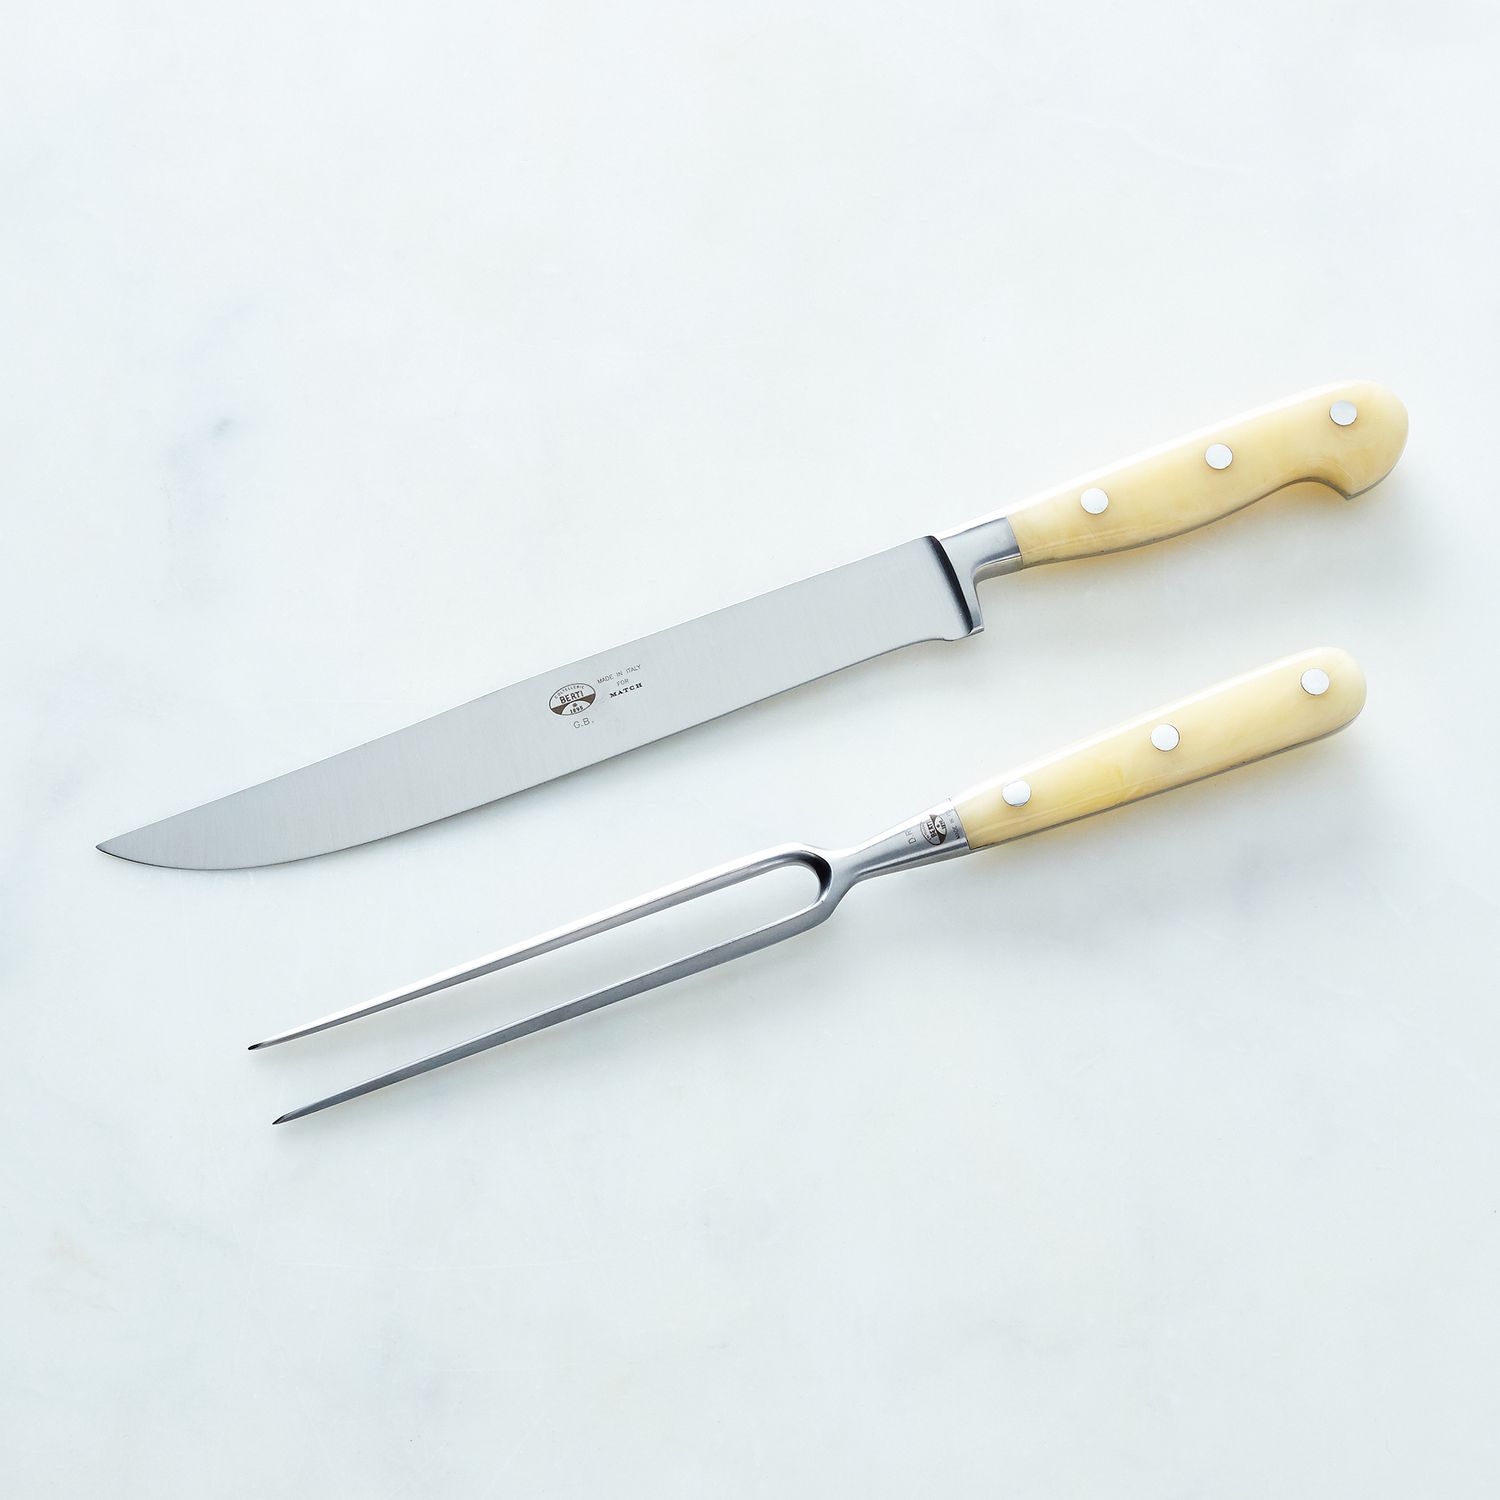 Berti I Forgiati Carving Knife & Serving Set with Cream Handles